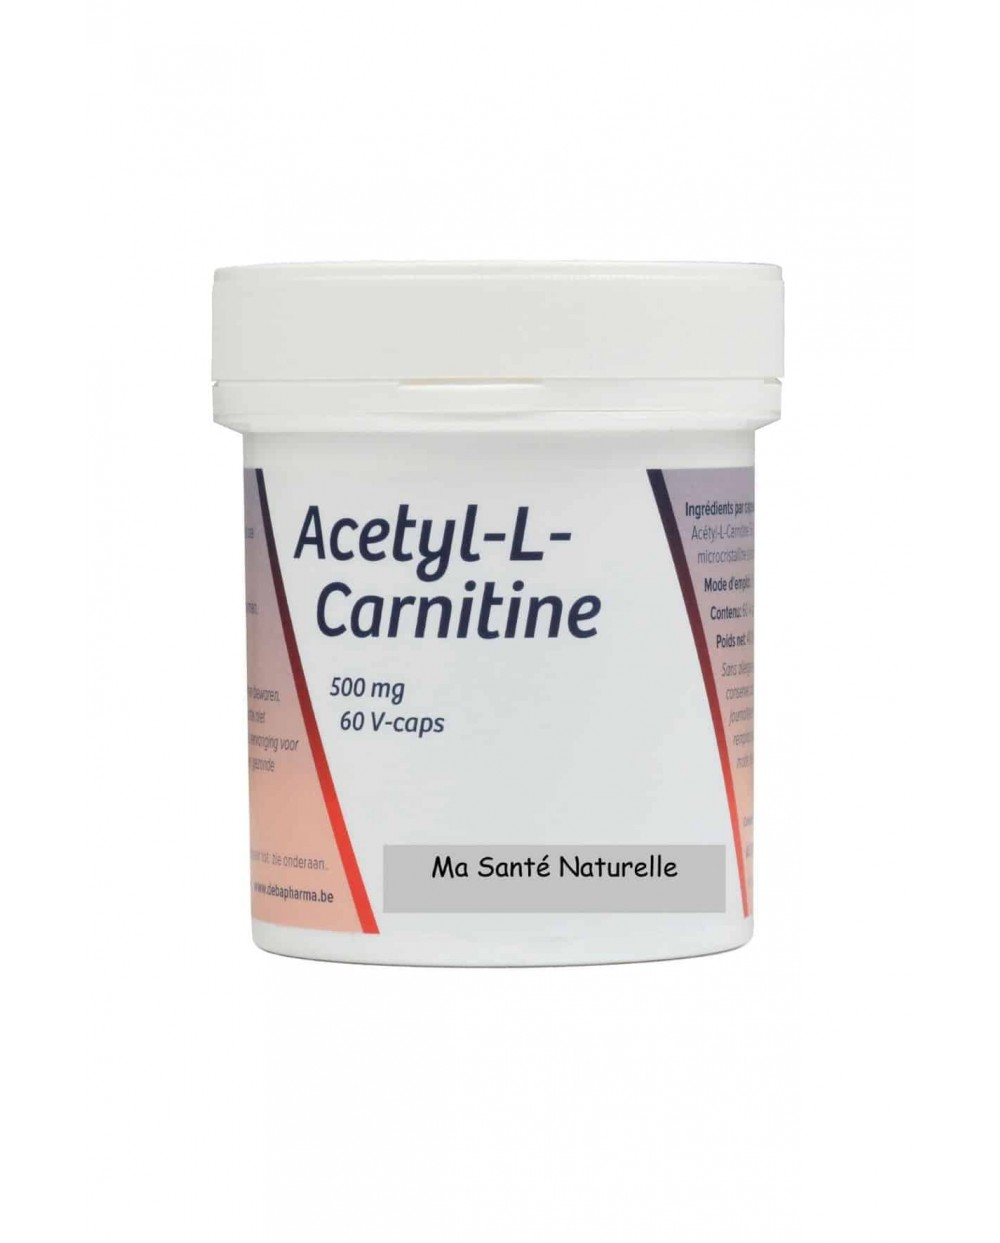 acetyl-l-carnitine,500 mg,60 V-caps